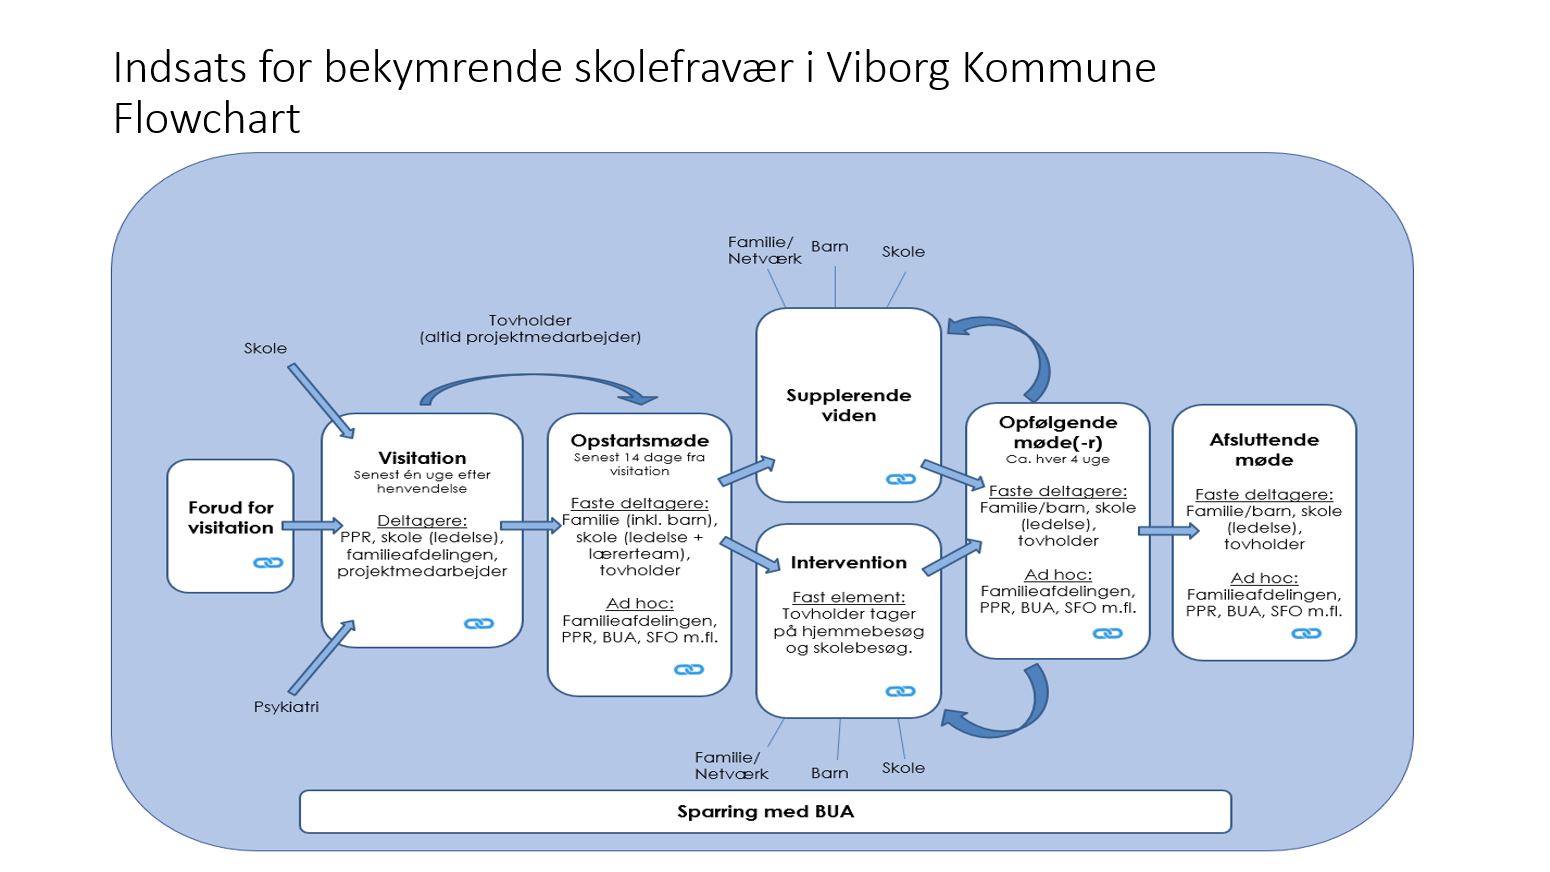 Figuren viser et flowchart over arbejdet med bekymrende skolefravær i Viborg kommune.